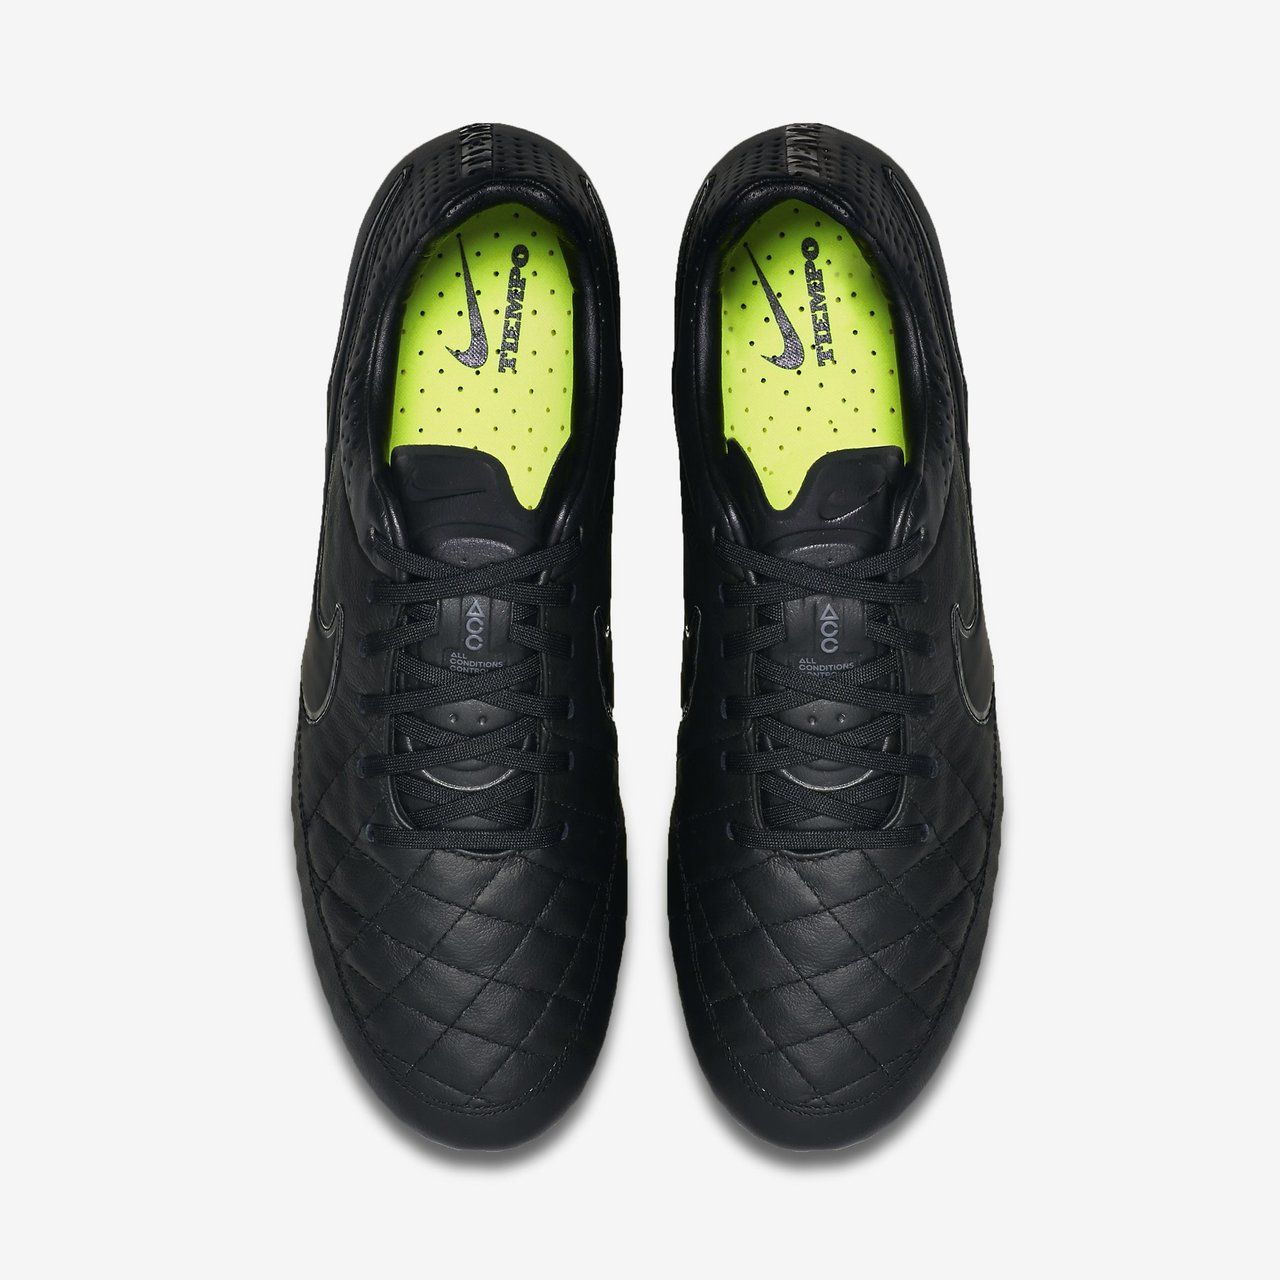 Armstrong nicotina Sandalias Nike Tiempo Legend V FG - Nike Academy Black Pack - Black / Volt / Black -  Football Shirt Culture - Latest Football Kit News and More